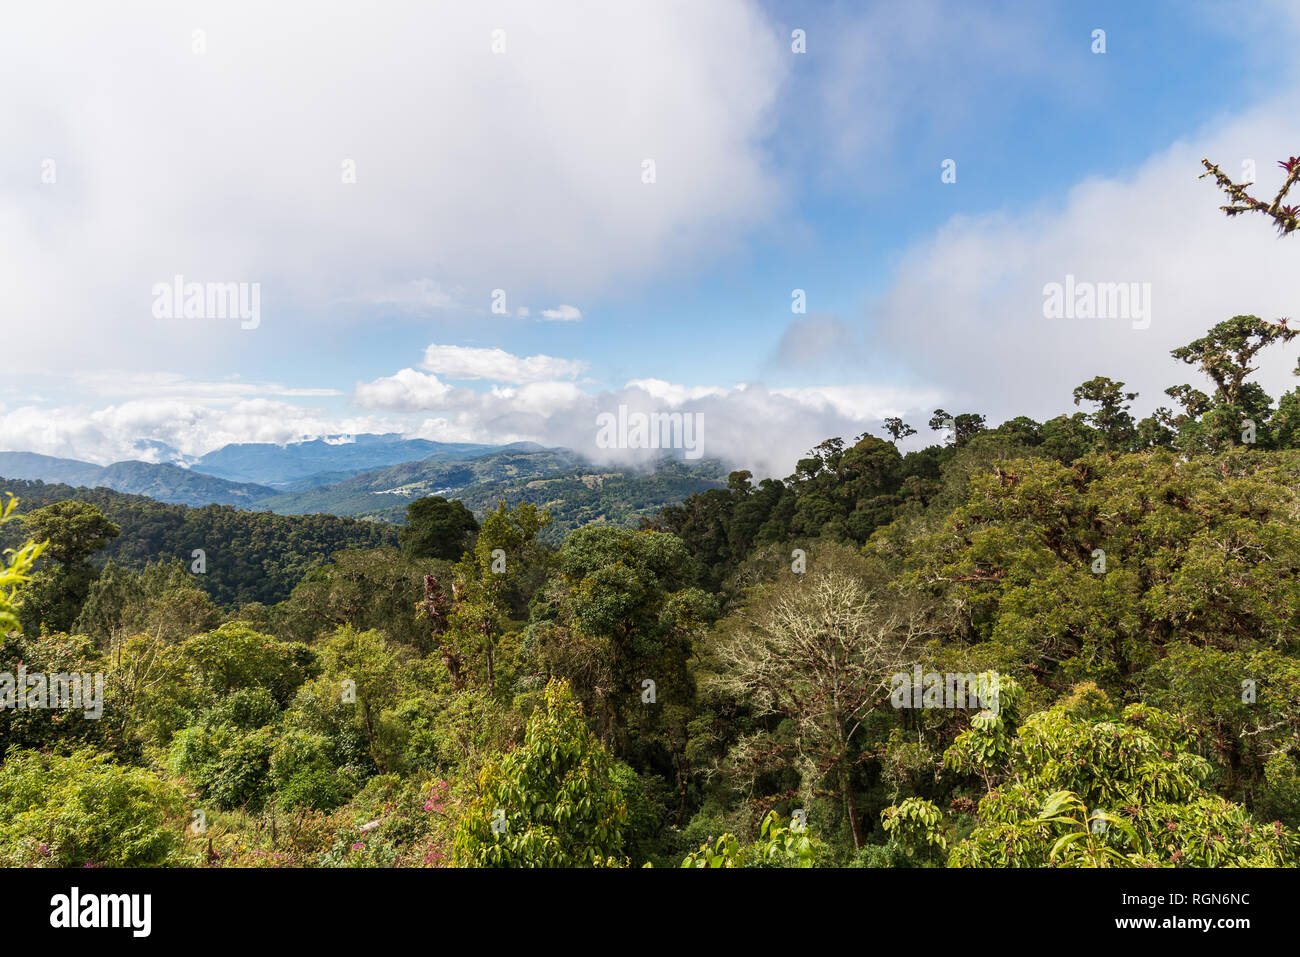 El bosque tropical de Costa Rica. América Central. Foto de stock